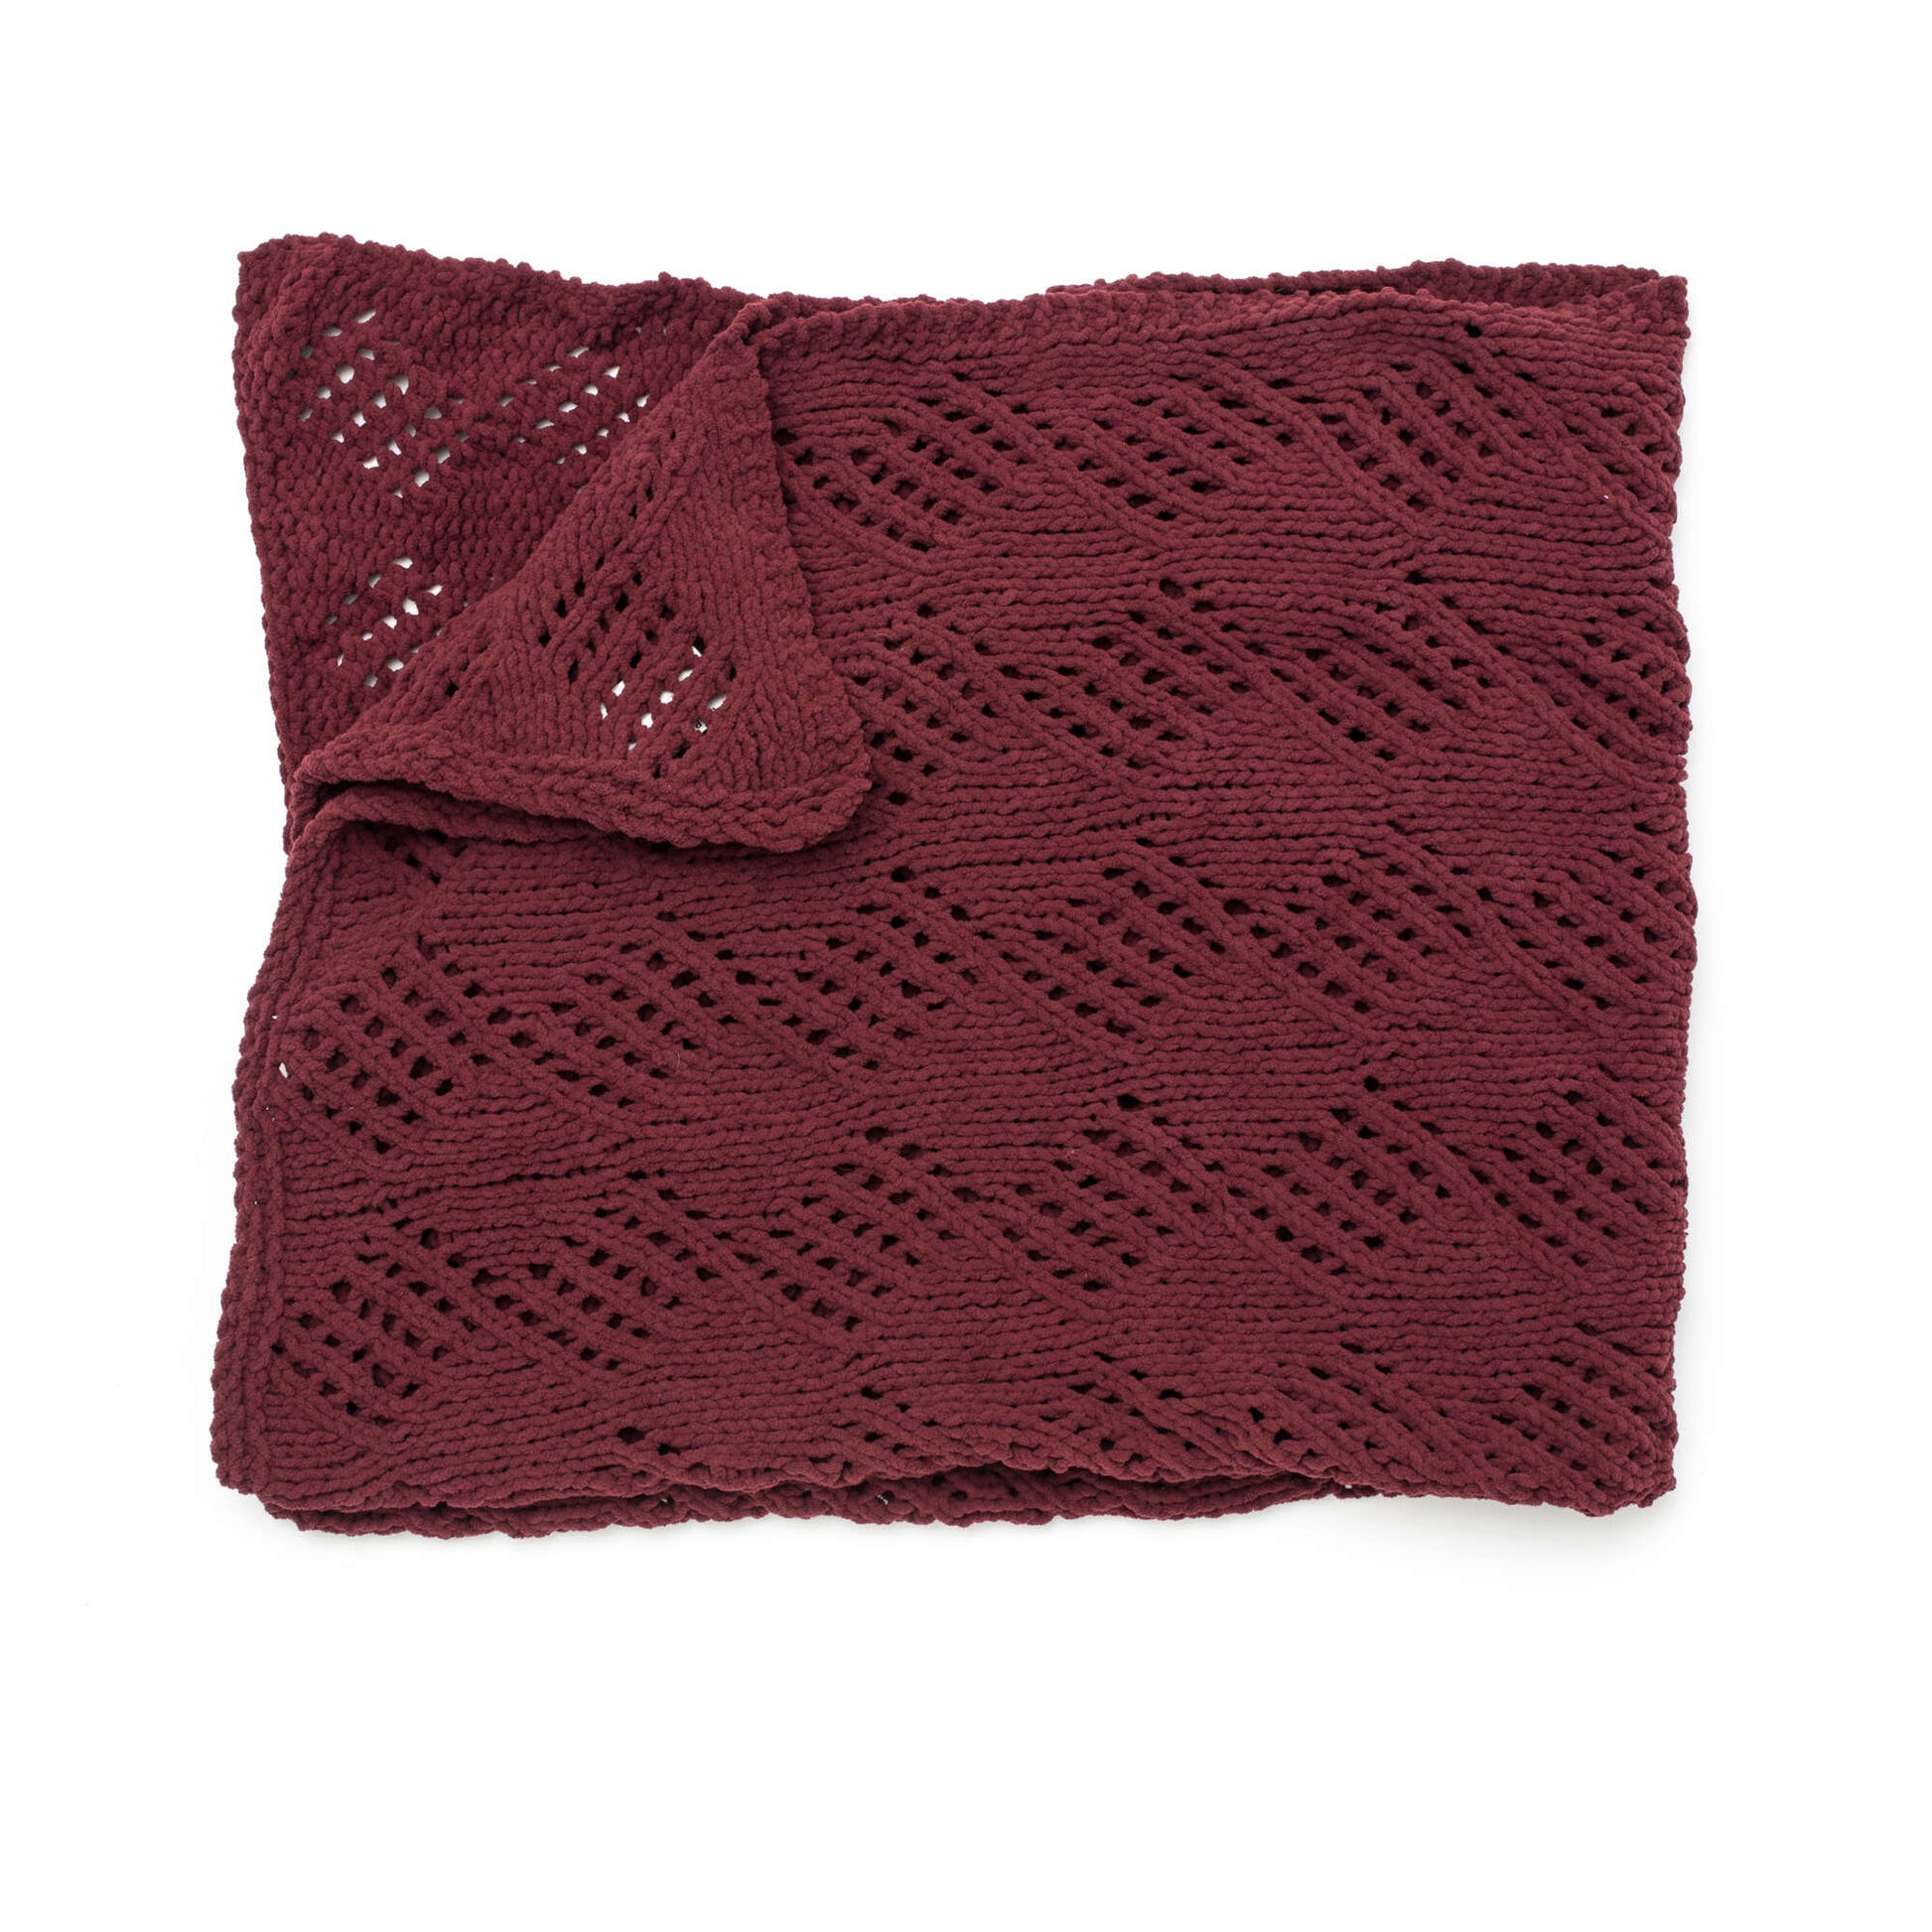 Bernat Angled Eyelets Knit Blanket Knit Blanket made in Bernat Blanket yarn